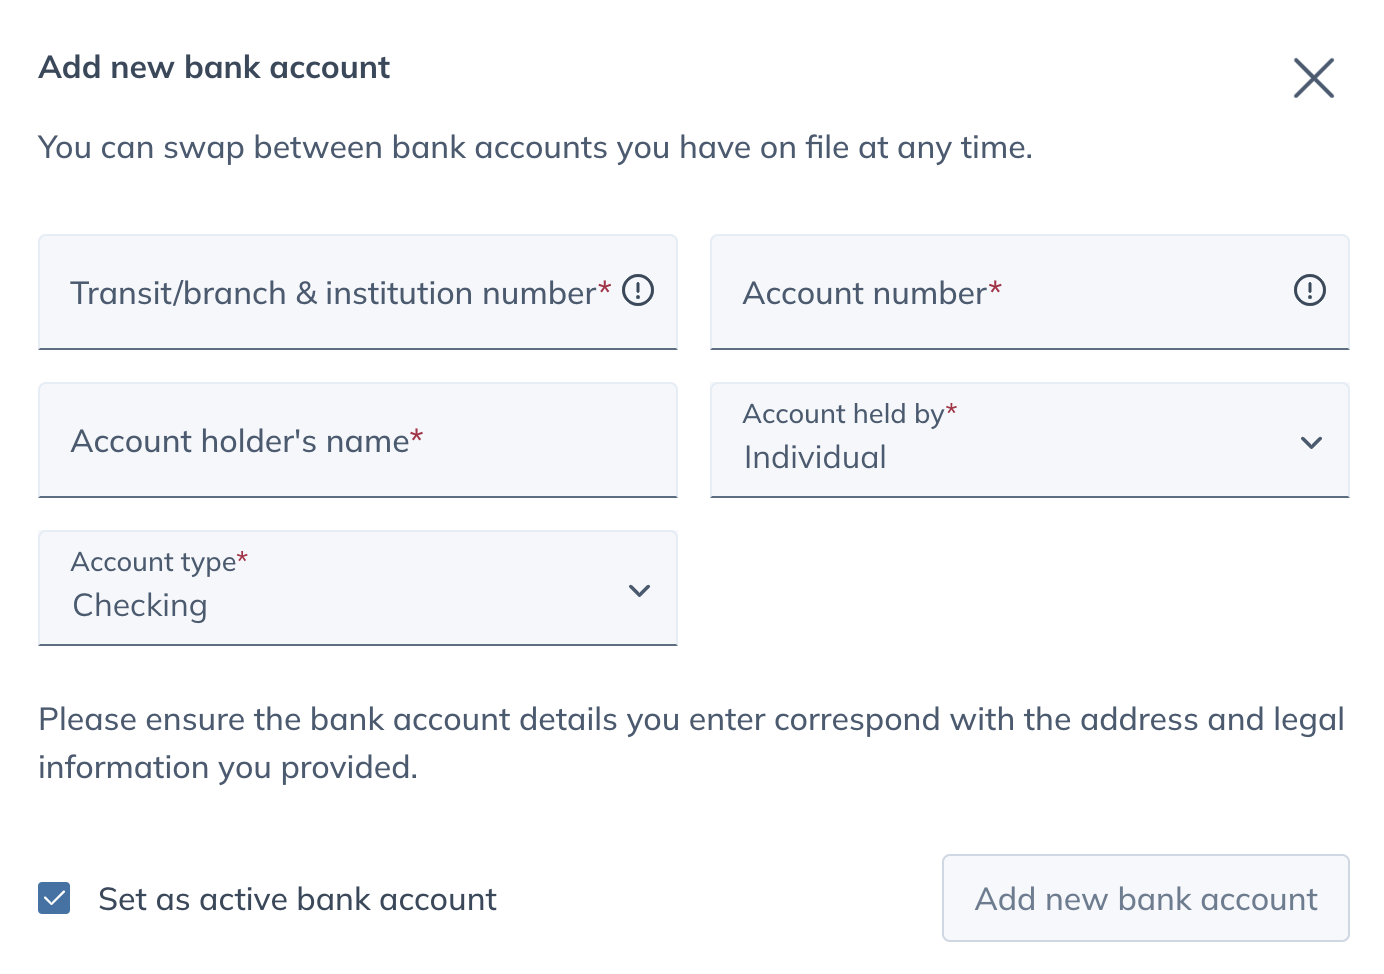 Add new bank account modal.